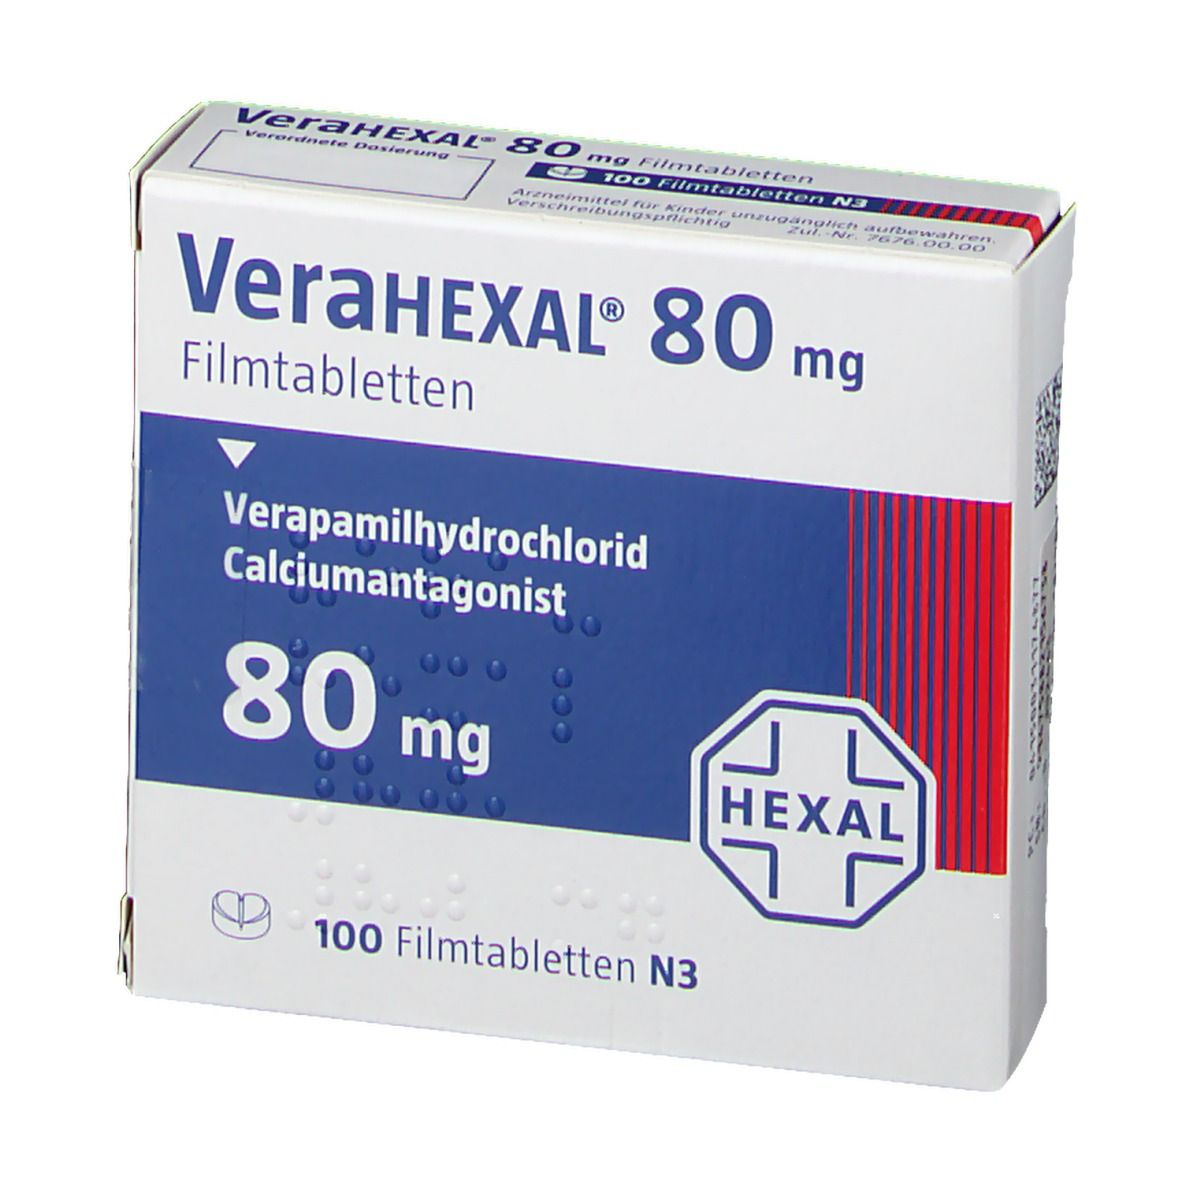 VeraHEXAL® 80 mg